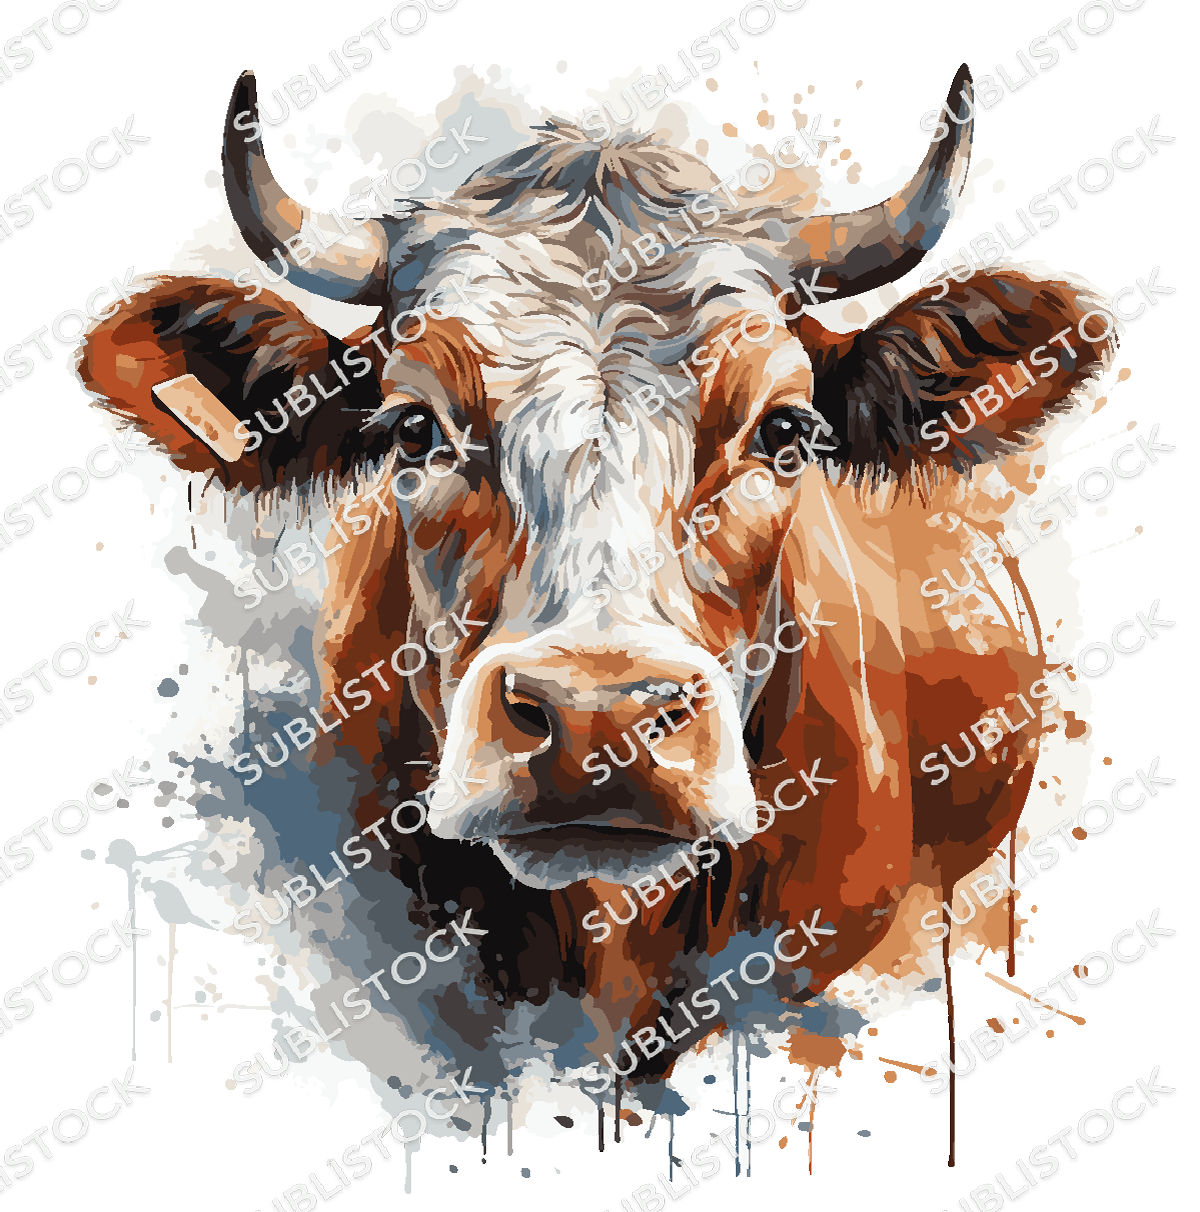 Cow Gaze Charm - Sublistock